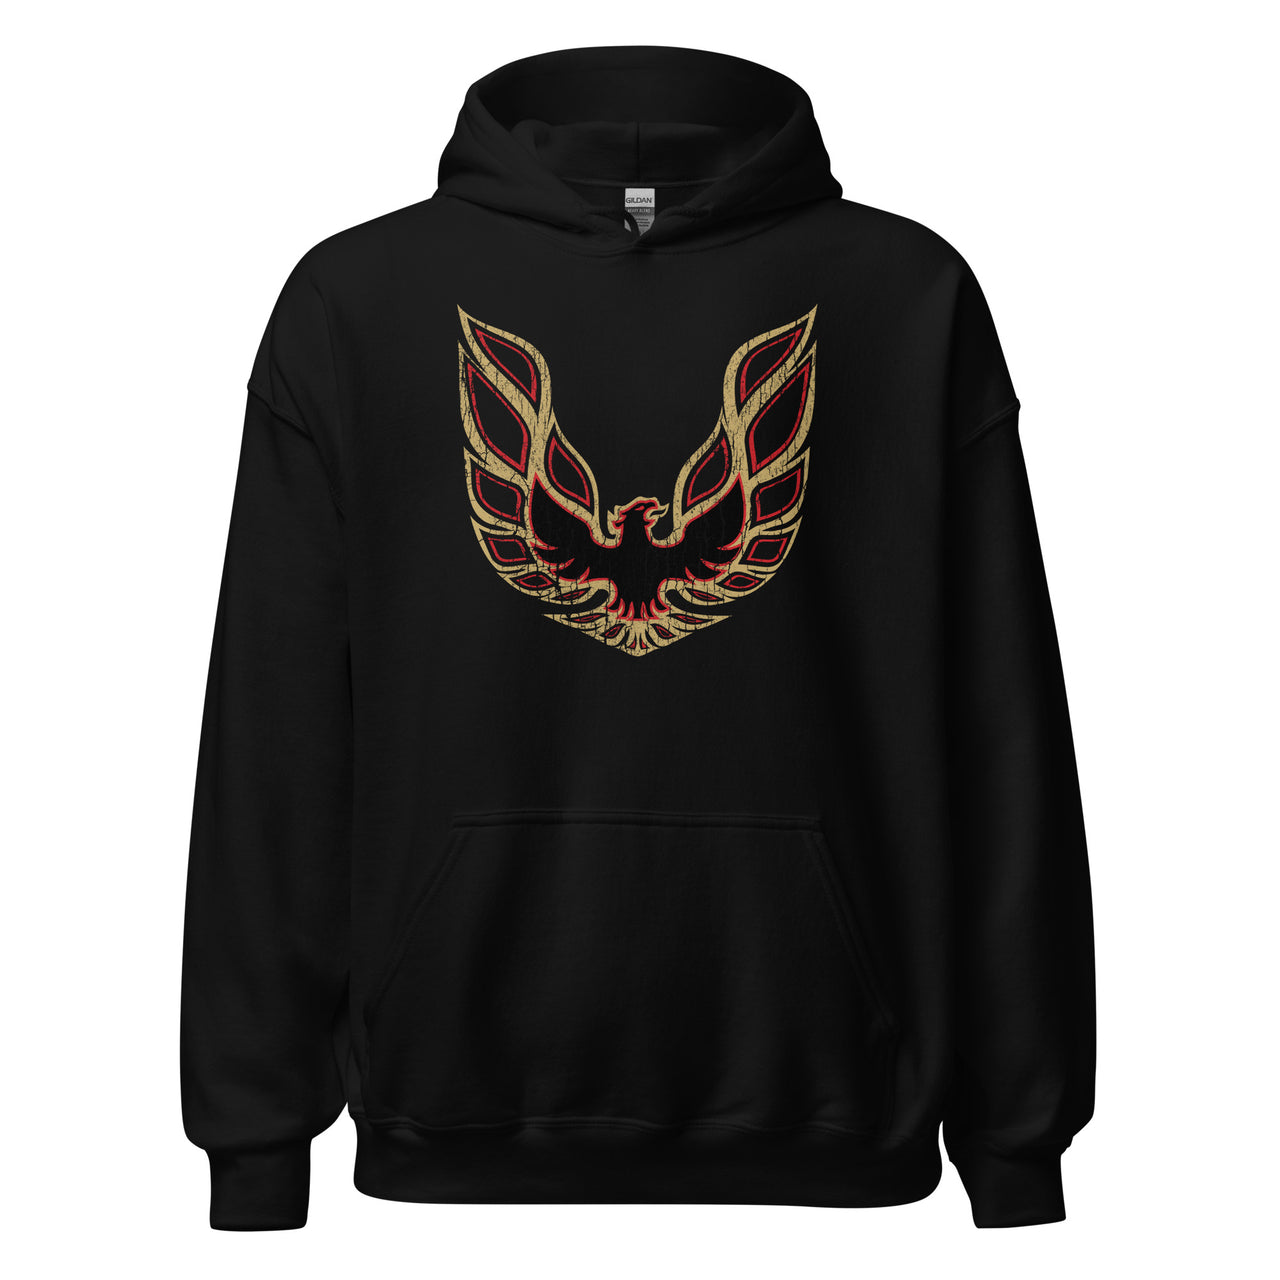 Traditional Trans Am Firebird Logo Hoodie in black